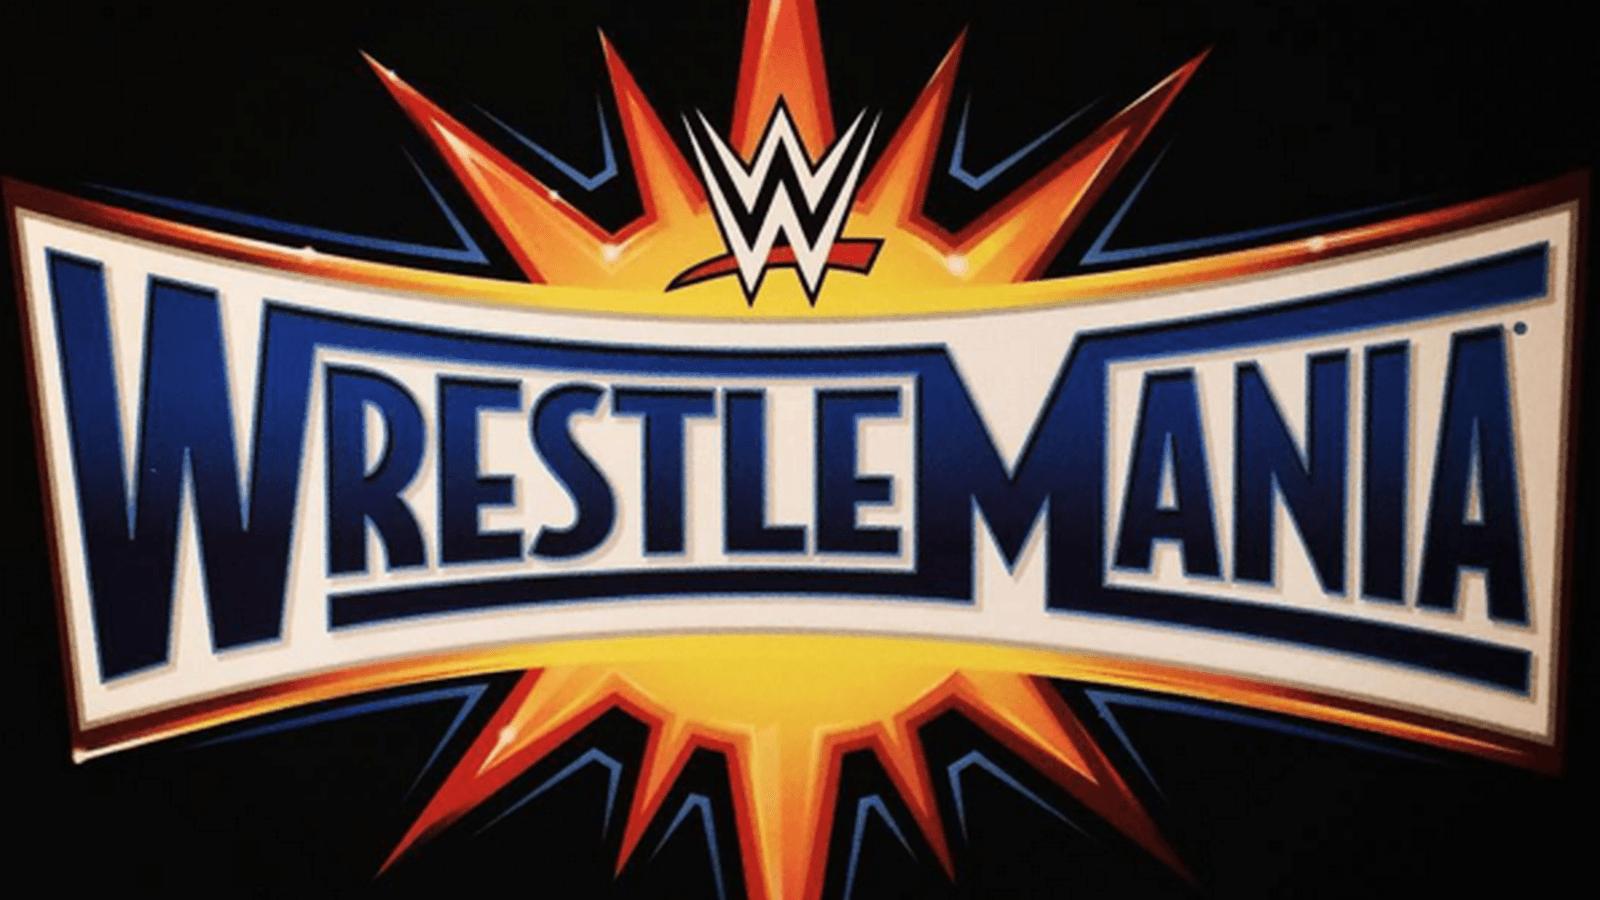 Here&the official logo for WrestleMania 33/Starburst in Orlando